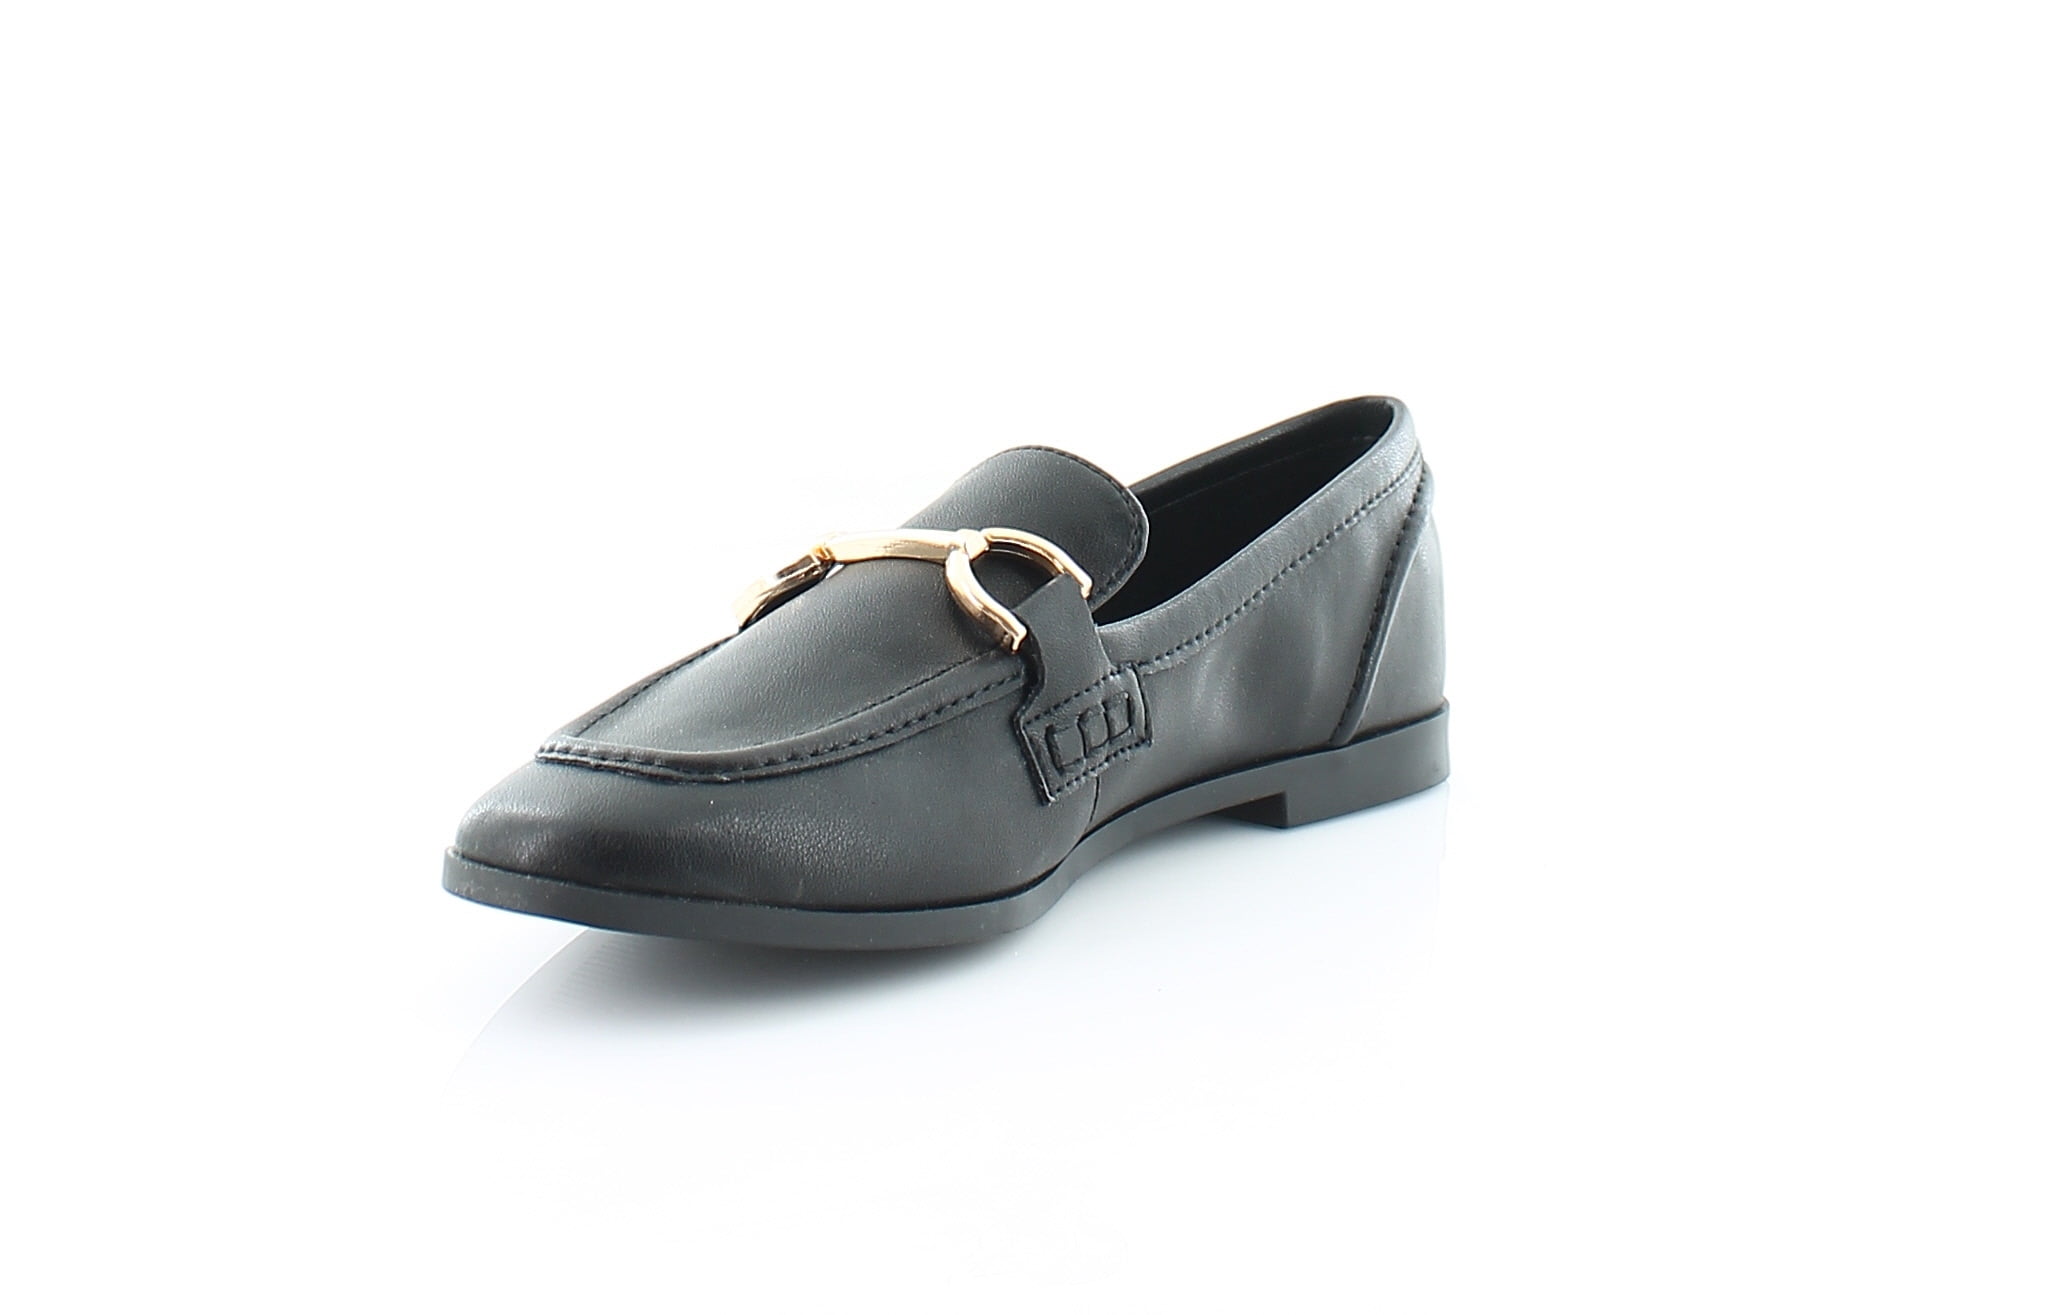 Steve Madden Carrine Women's Flats & Oxfords Black Leather Size 6 M ...